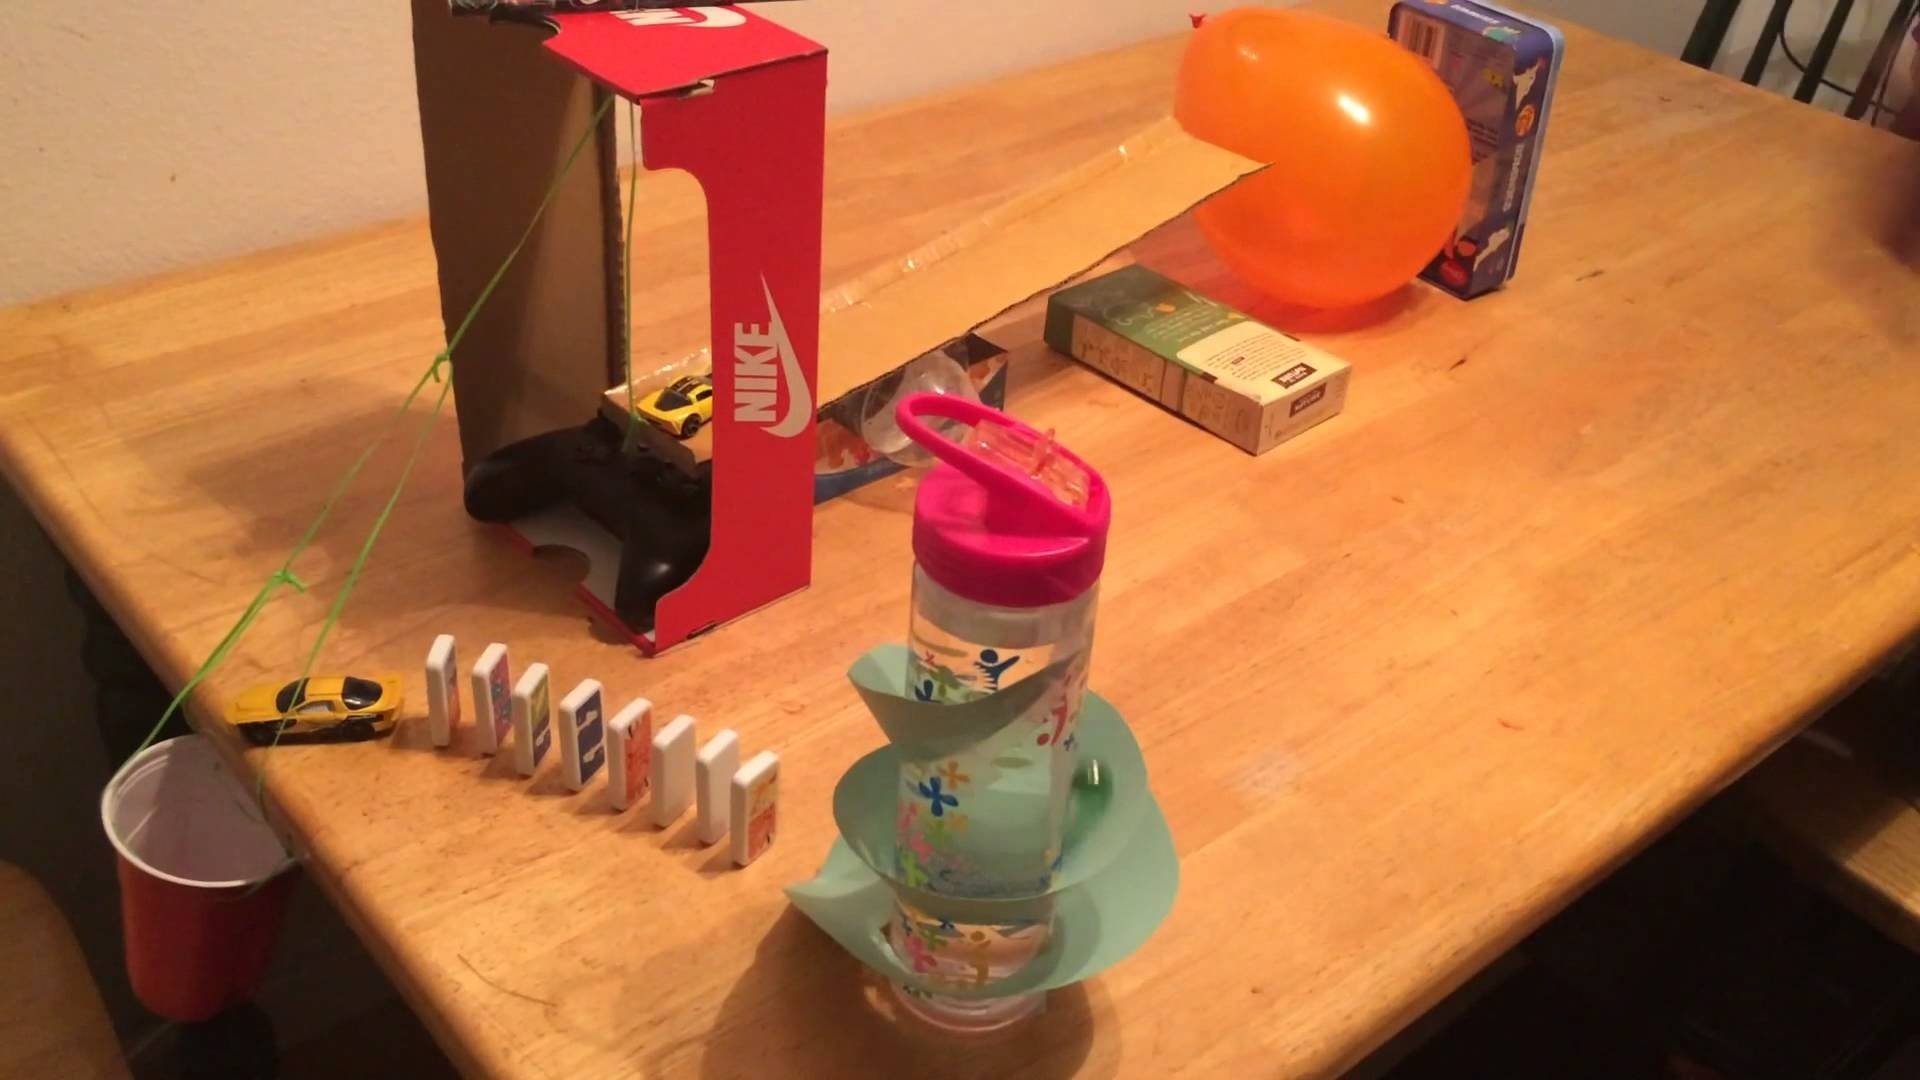 Short Amazing Rube Goldberg Machine Video for Rounded Face